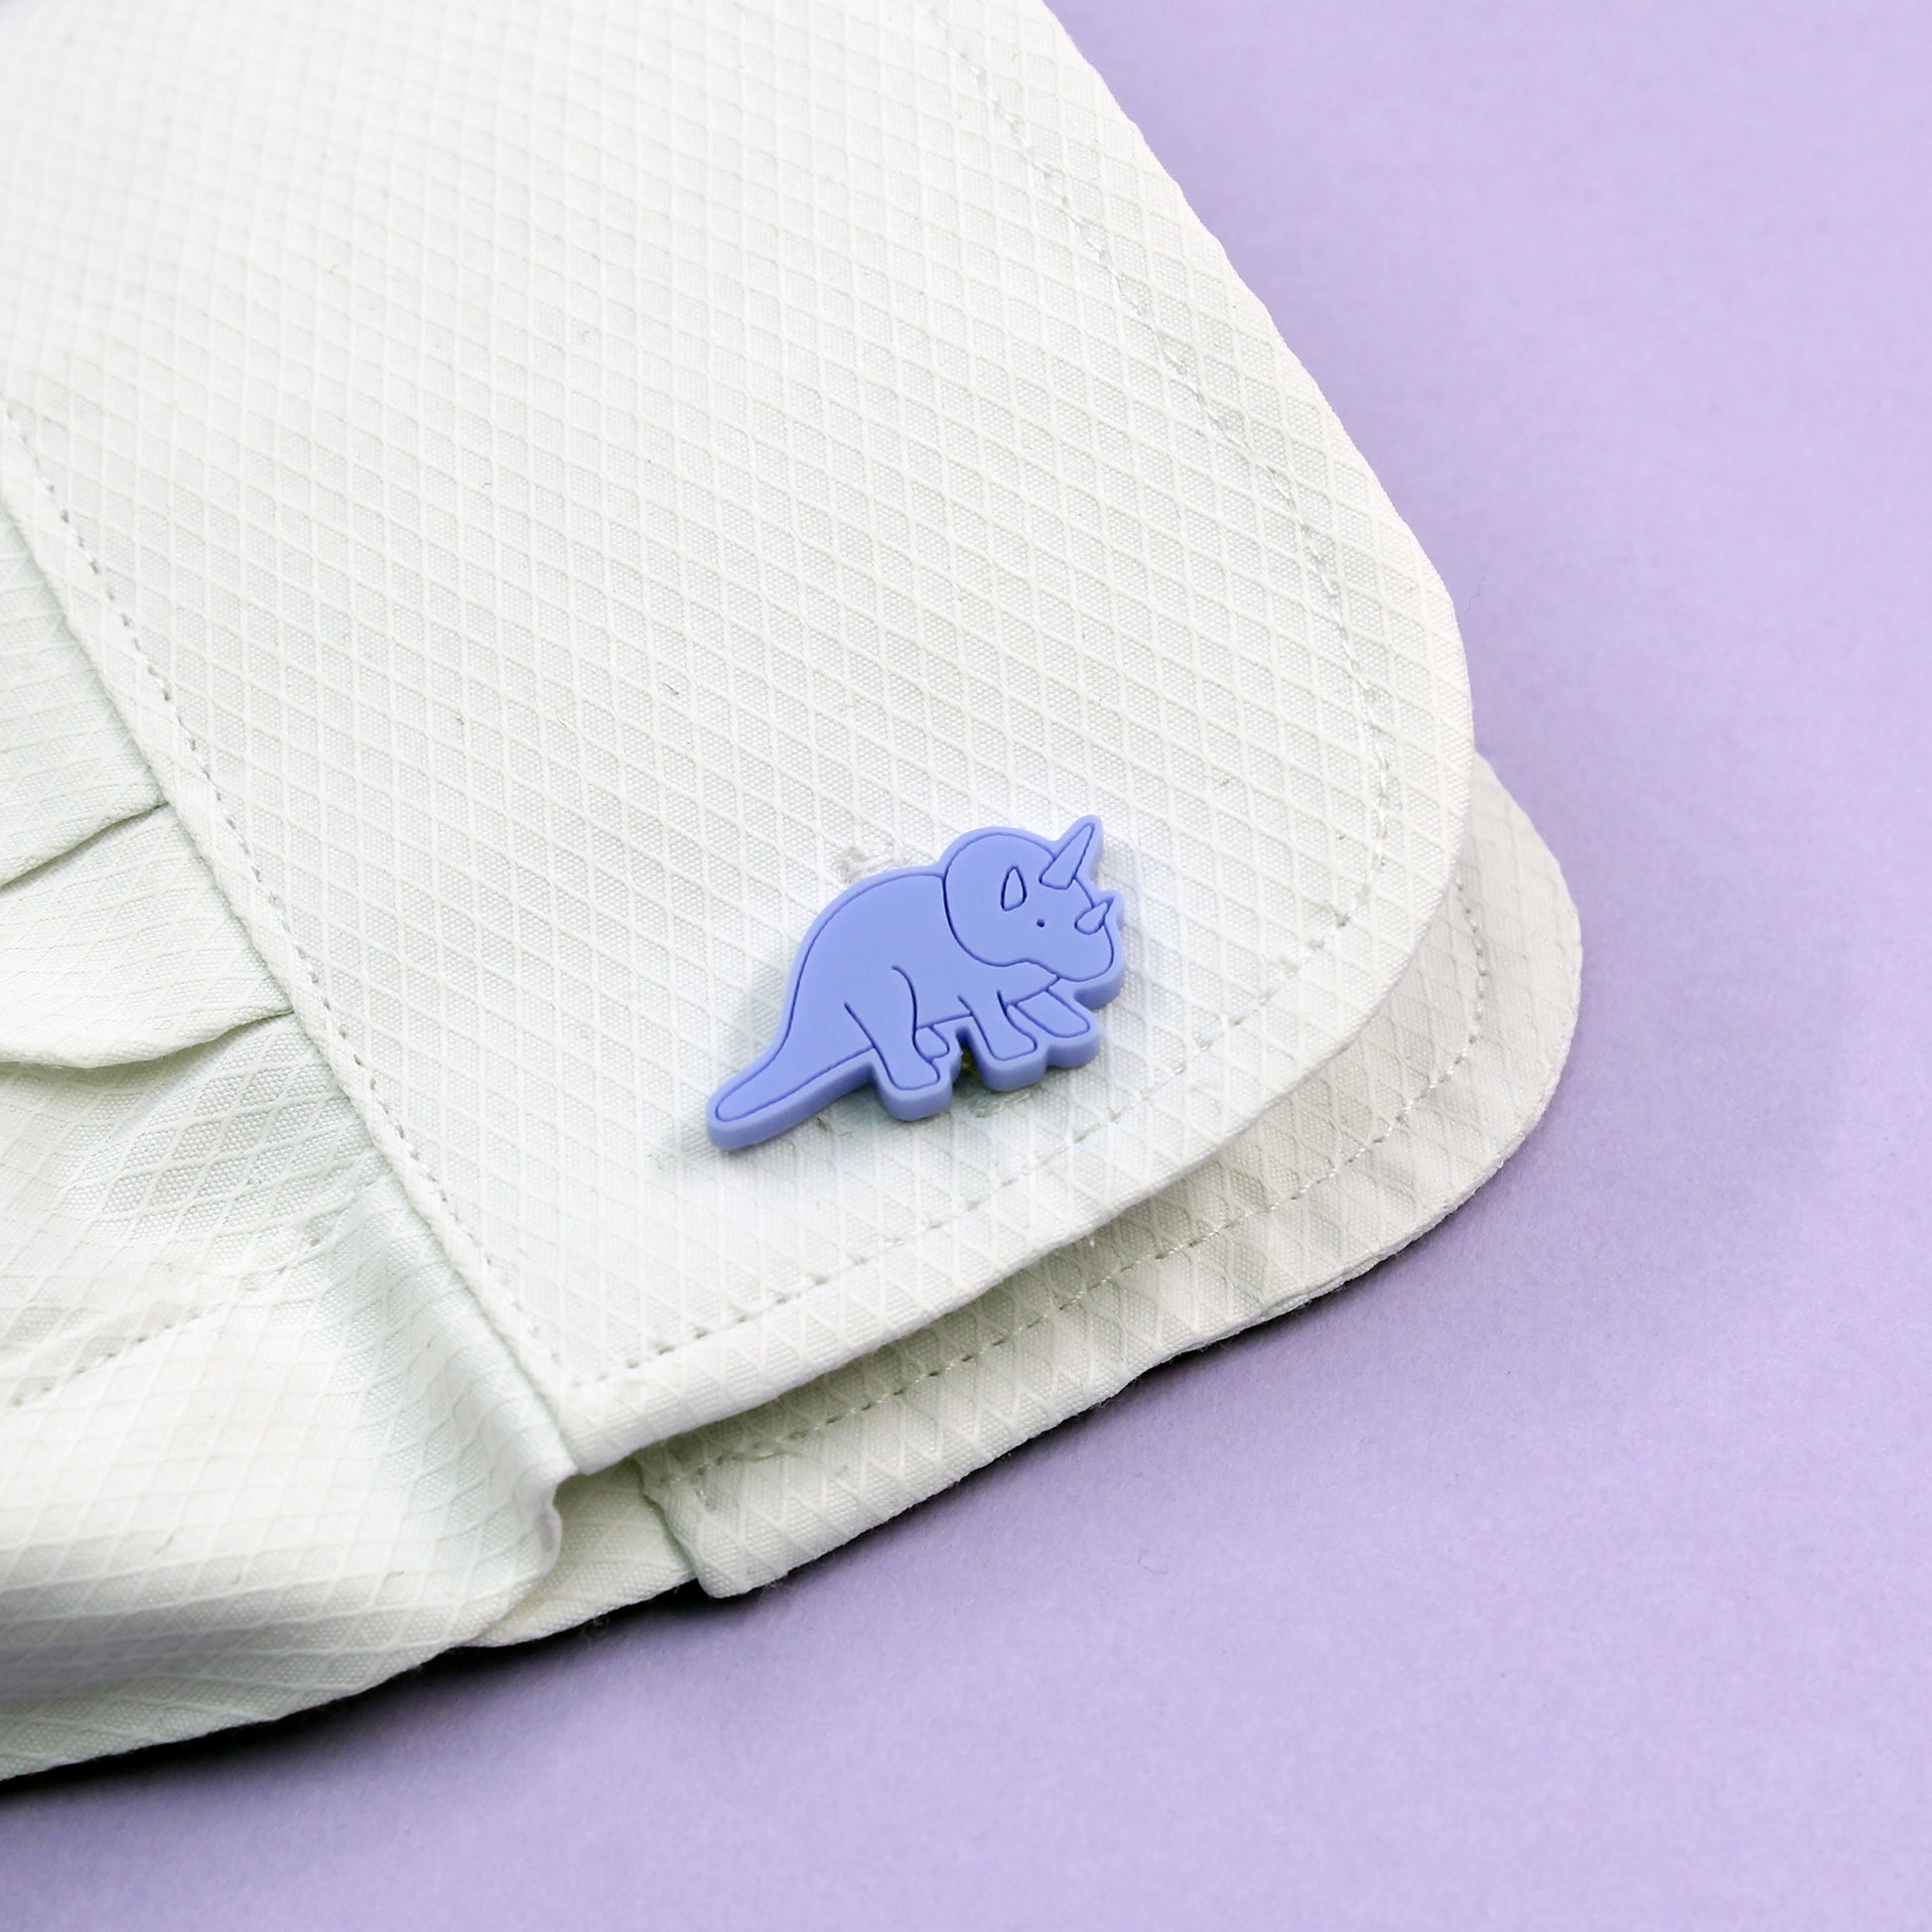 a blue triceratops cufflink on a white shirt cuff